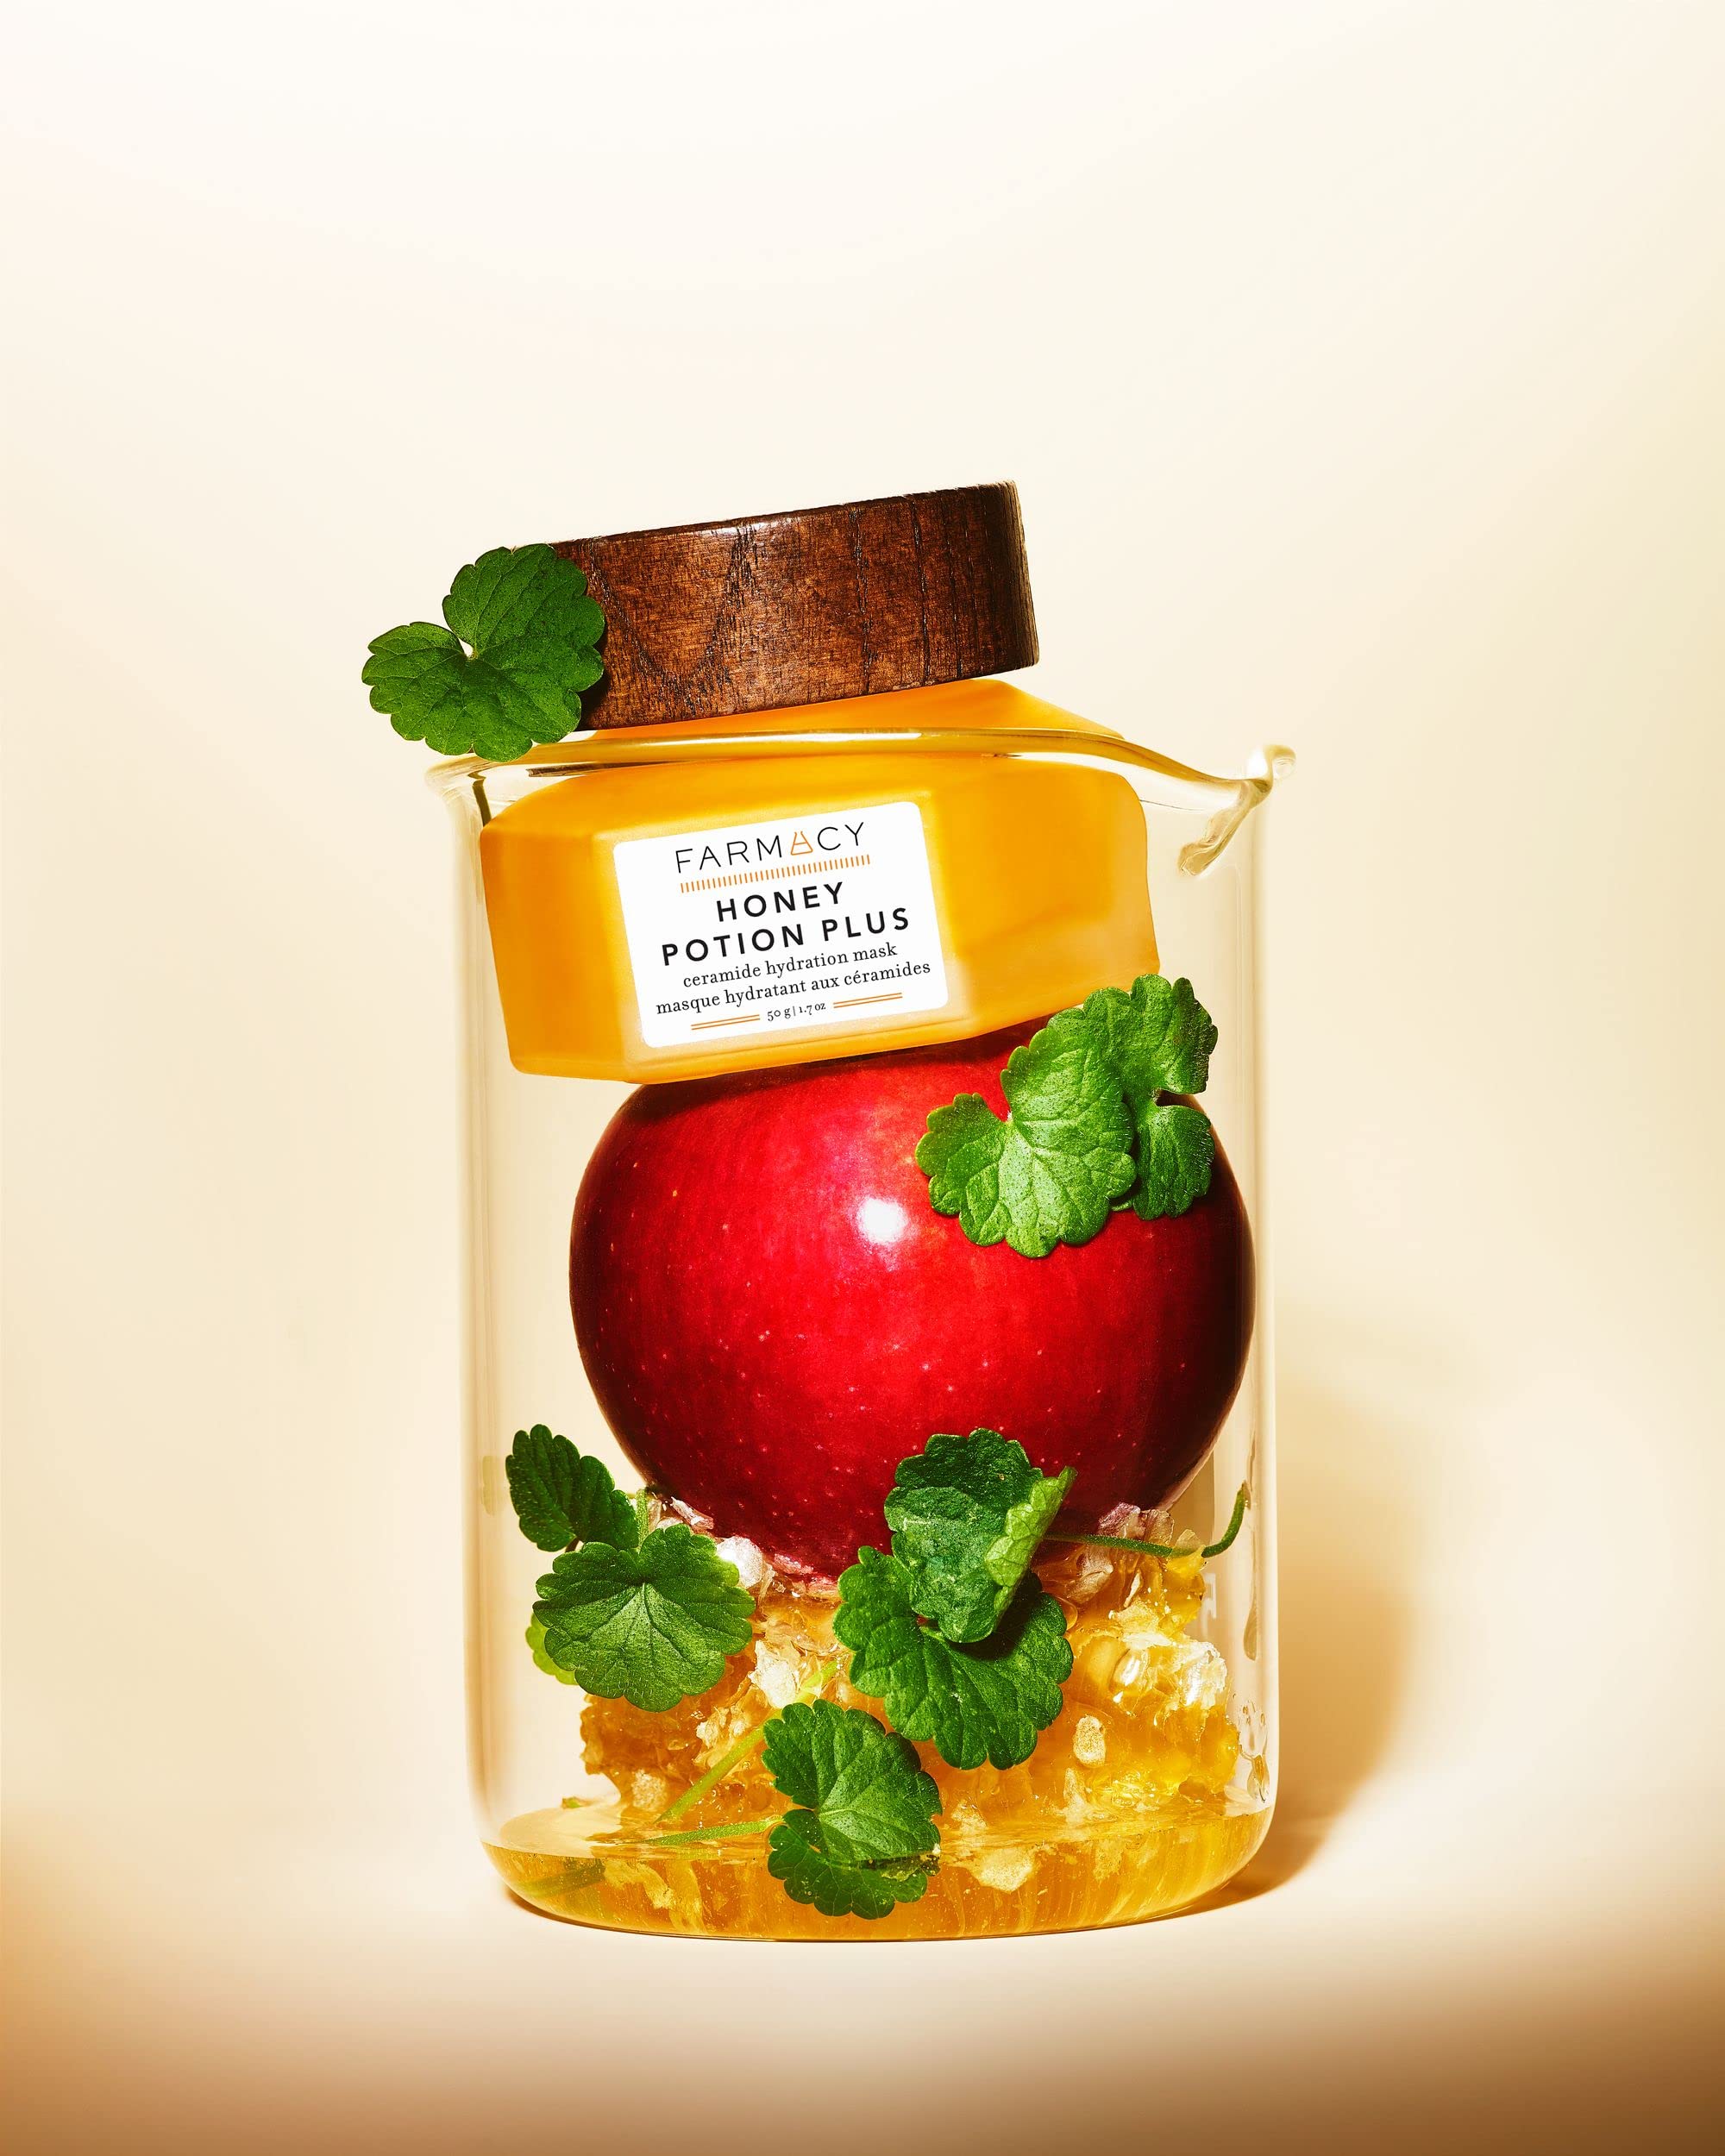 Farmacy Honey Potion Plus Face Mask - Antioxidant Rich Hydration Mask - Natural Moisturizing Facial Mask (1.7 Ounce/ 50 G)